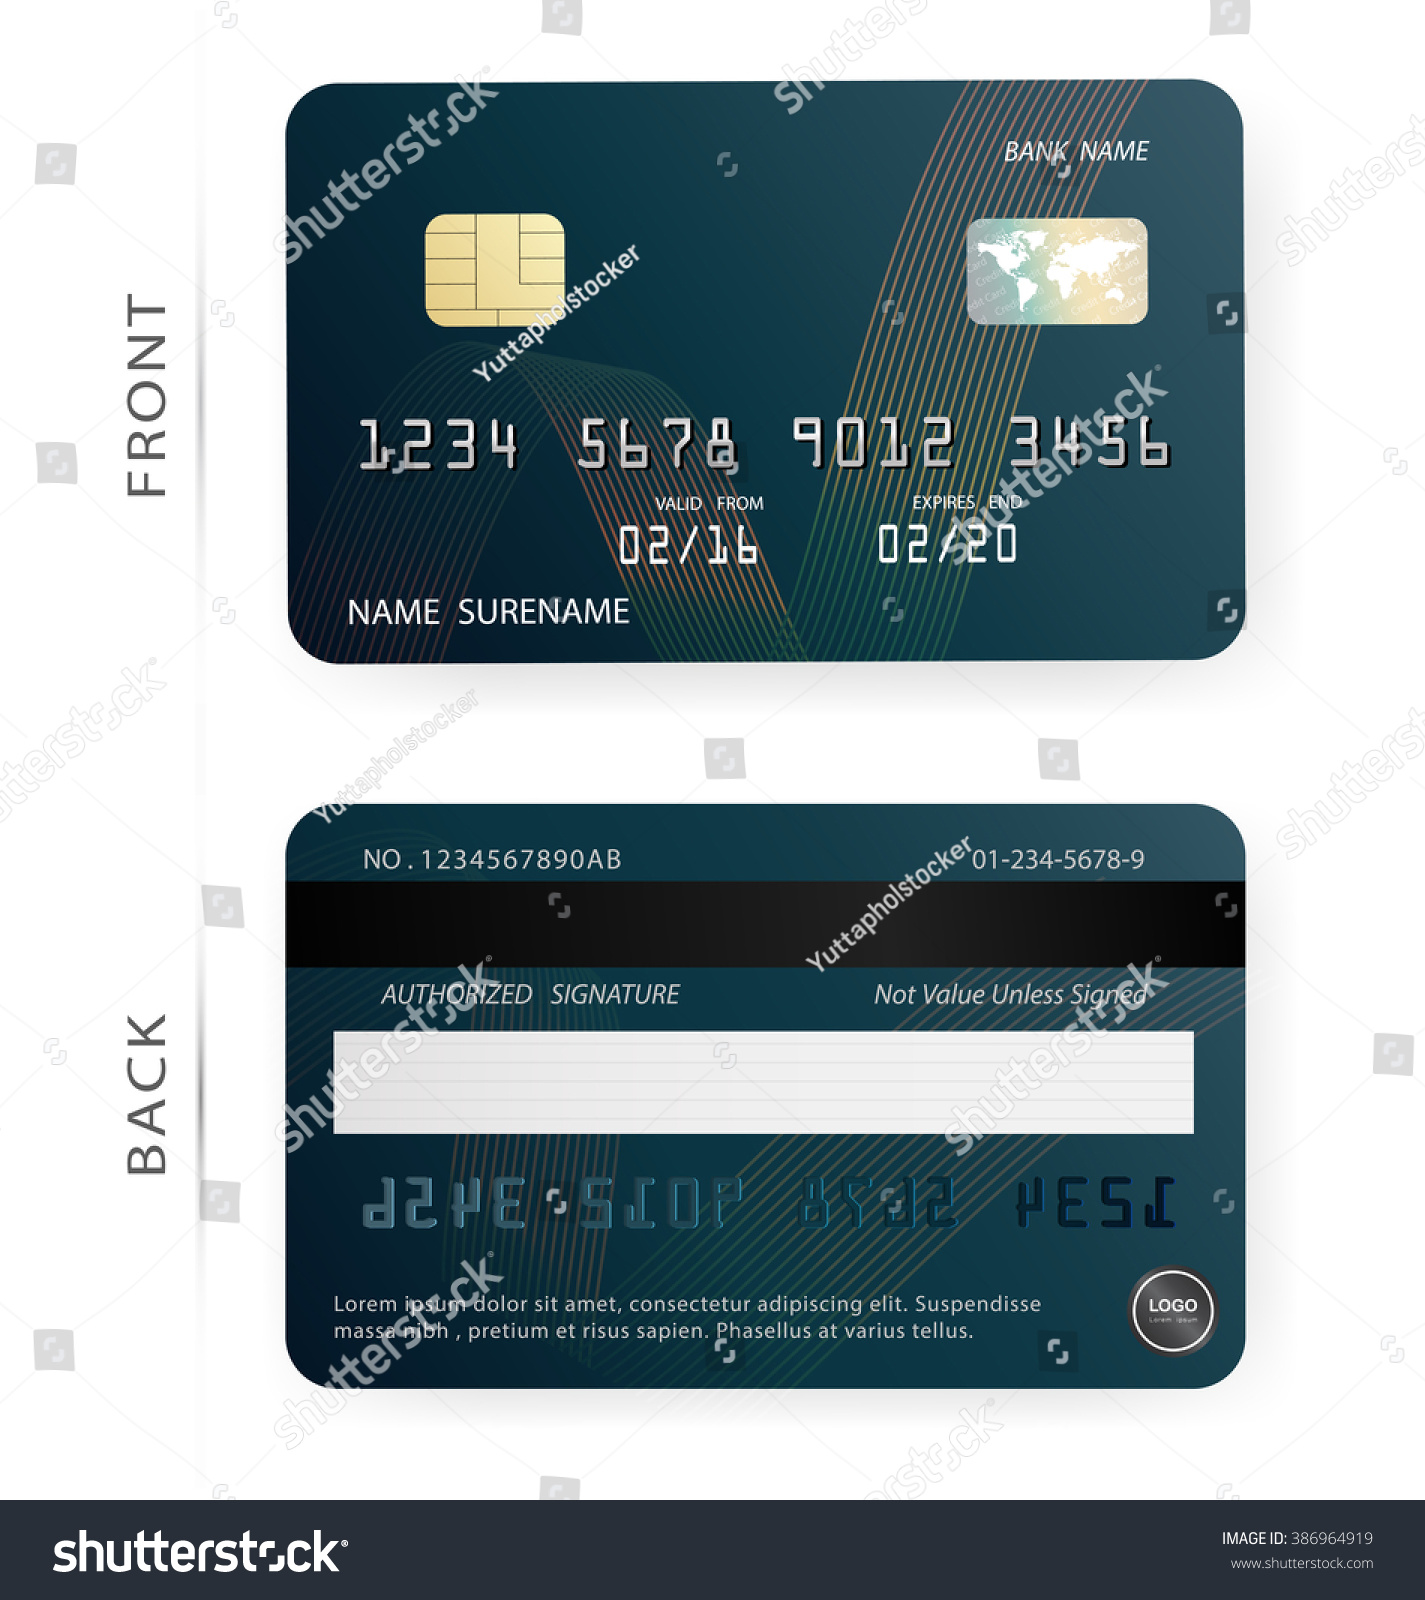 Credit Debit Card Design Template Vectorblue Stock Vector (Royalty Free ...